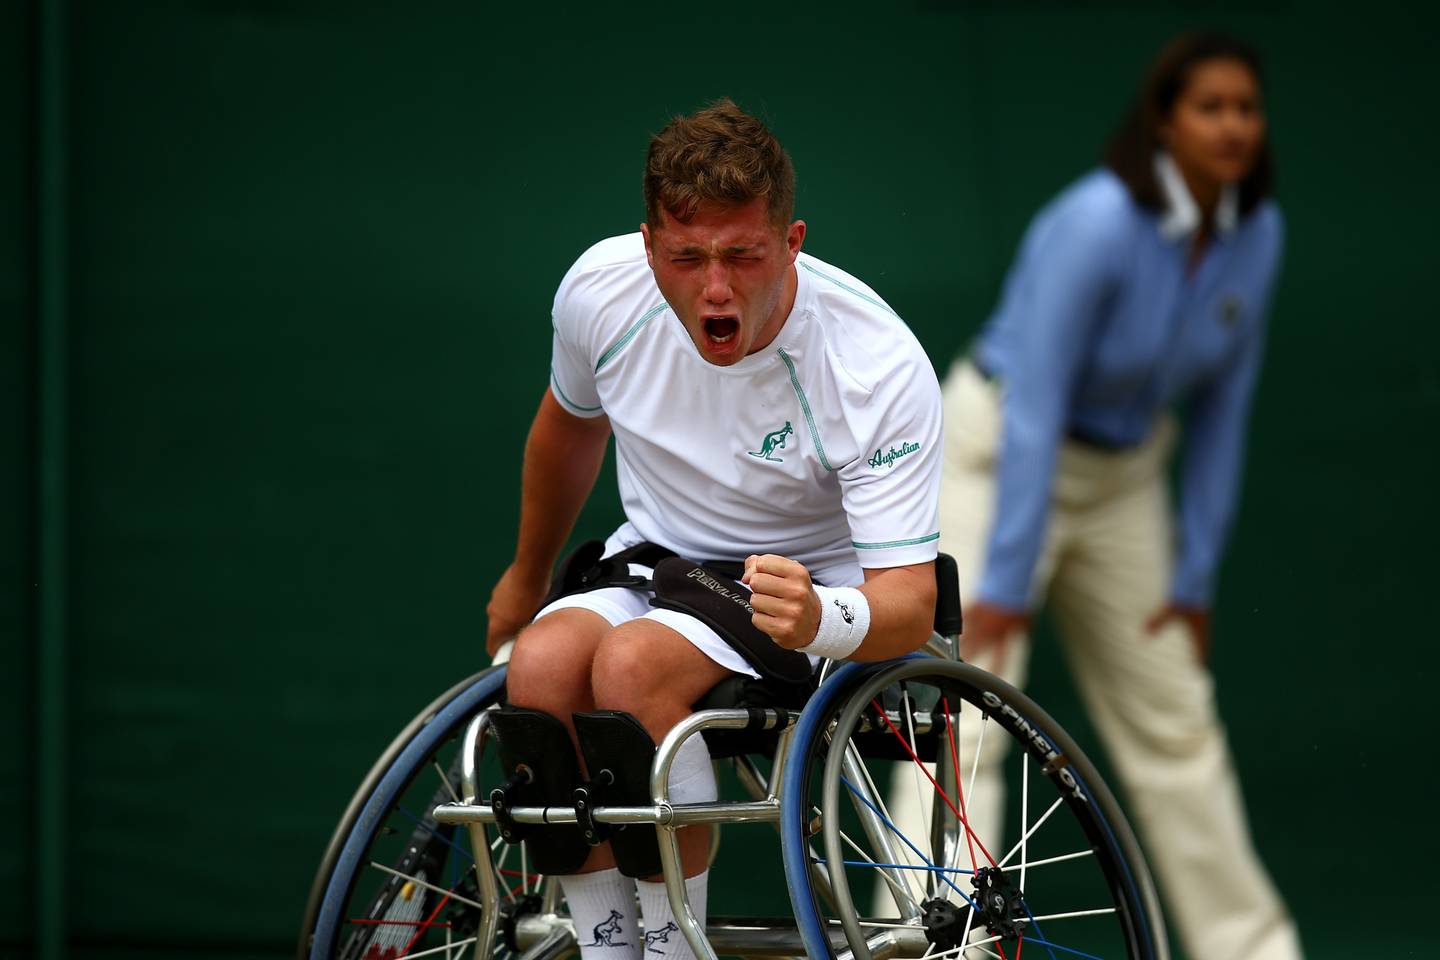 Alfie Hewett, wheelchair tennis player celebrating win at Wimbldeon 2017